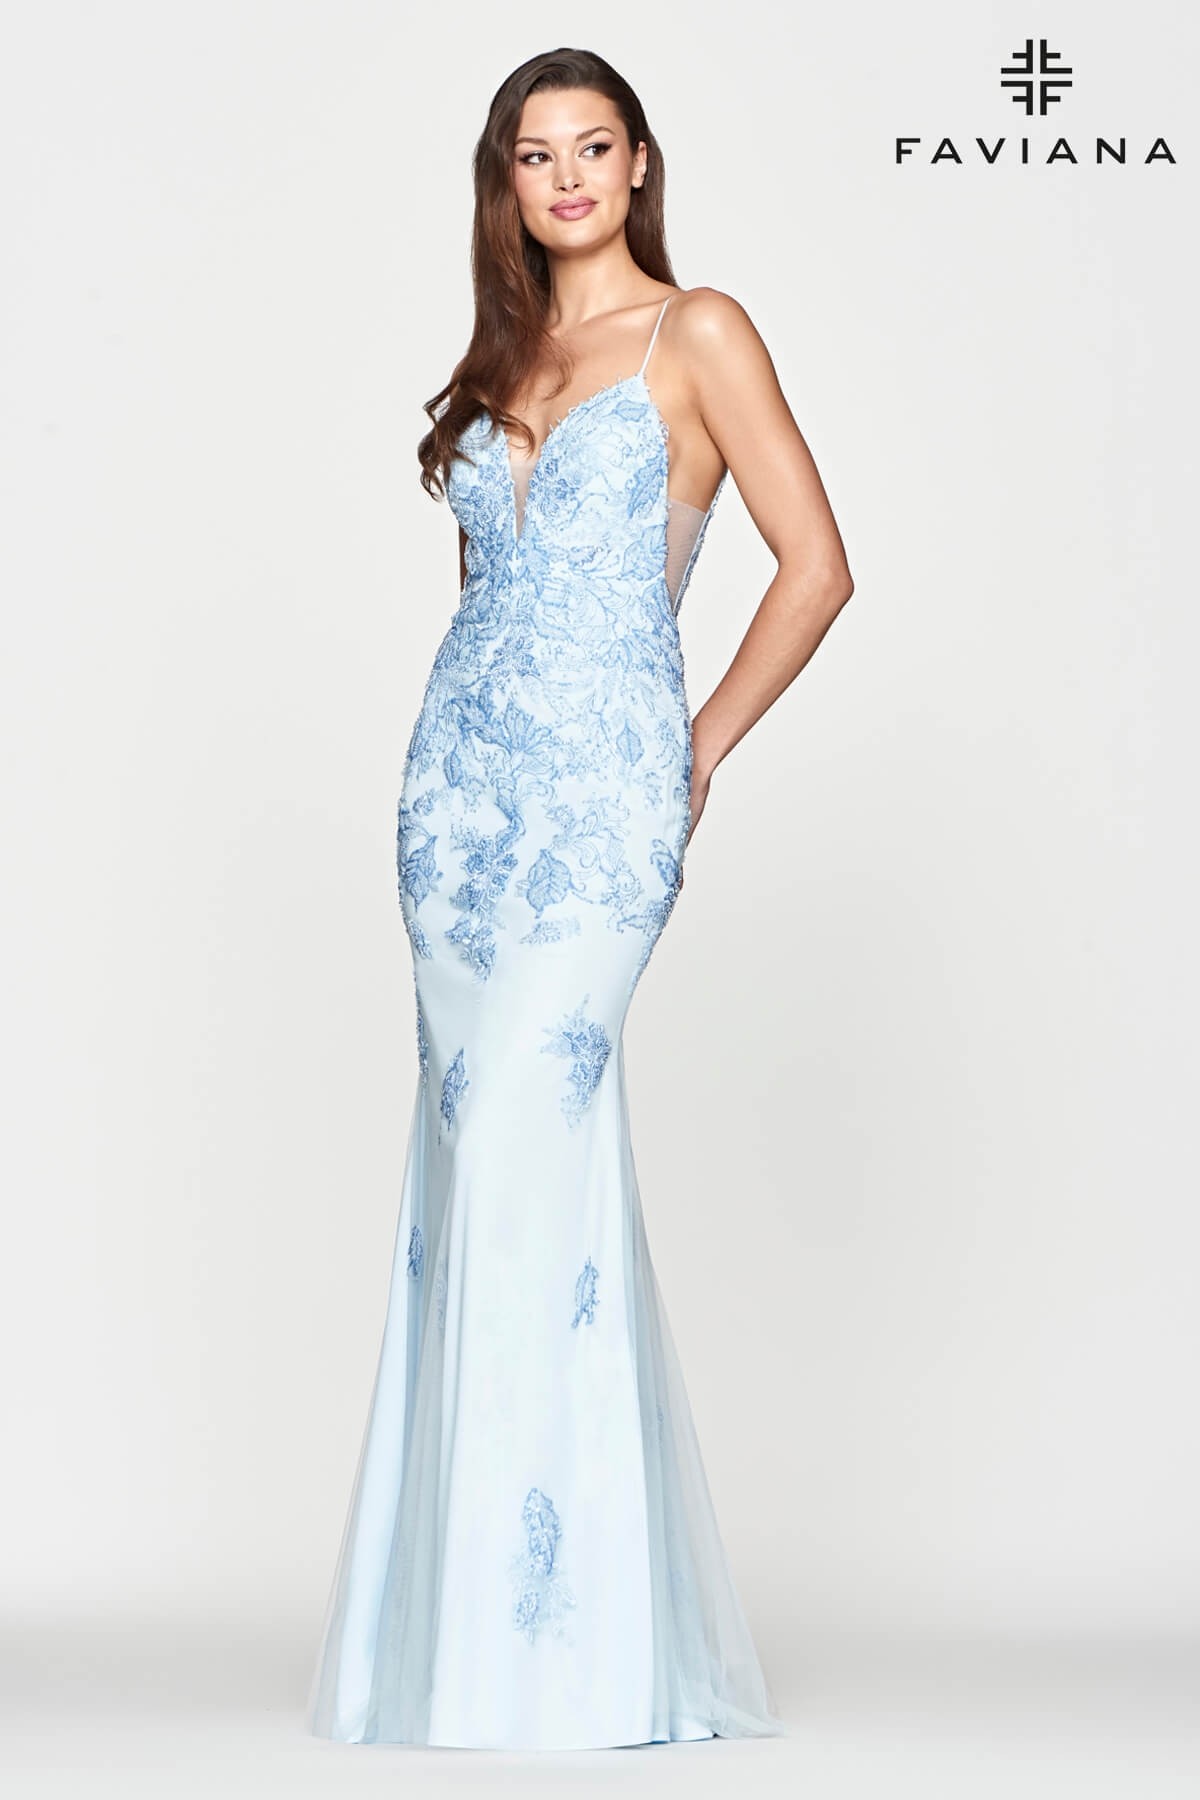 Faviana S10648 Prom Dress